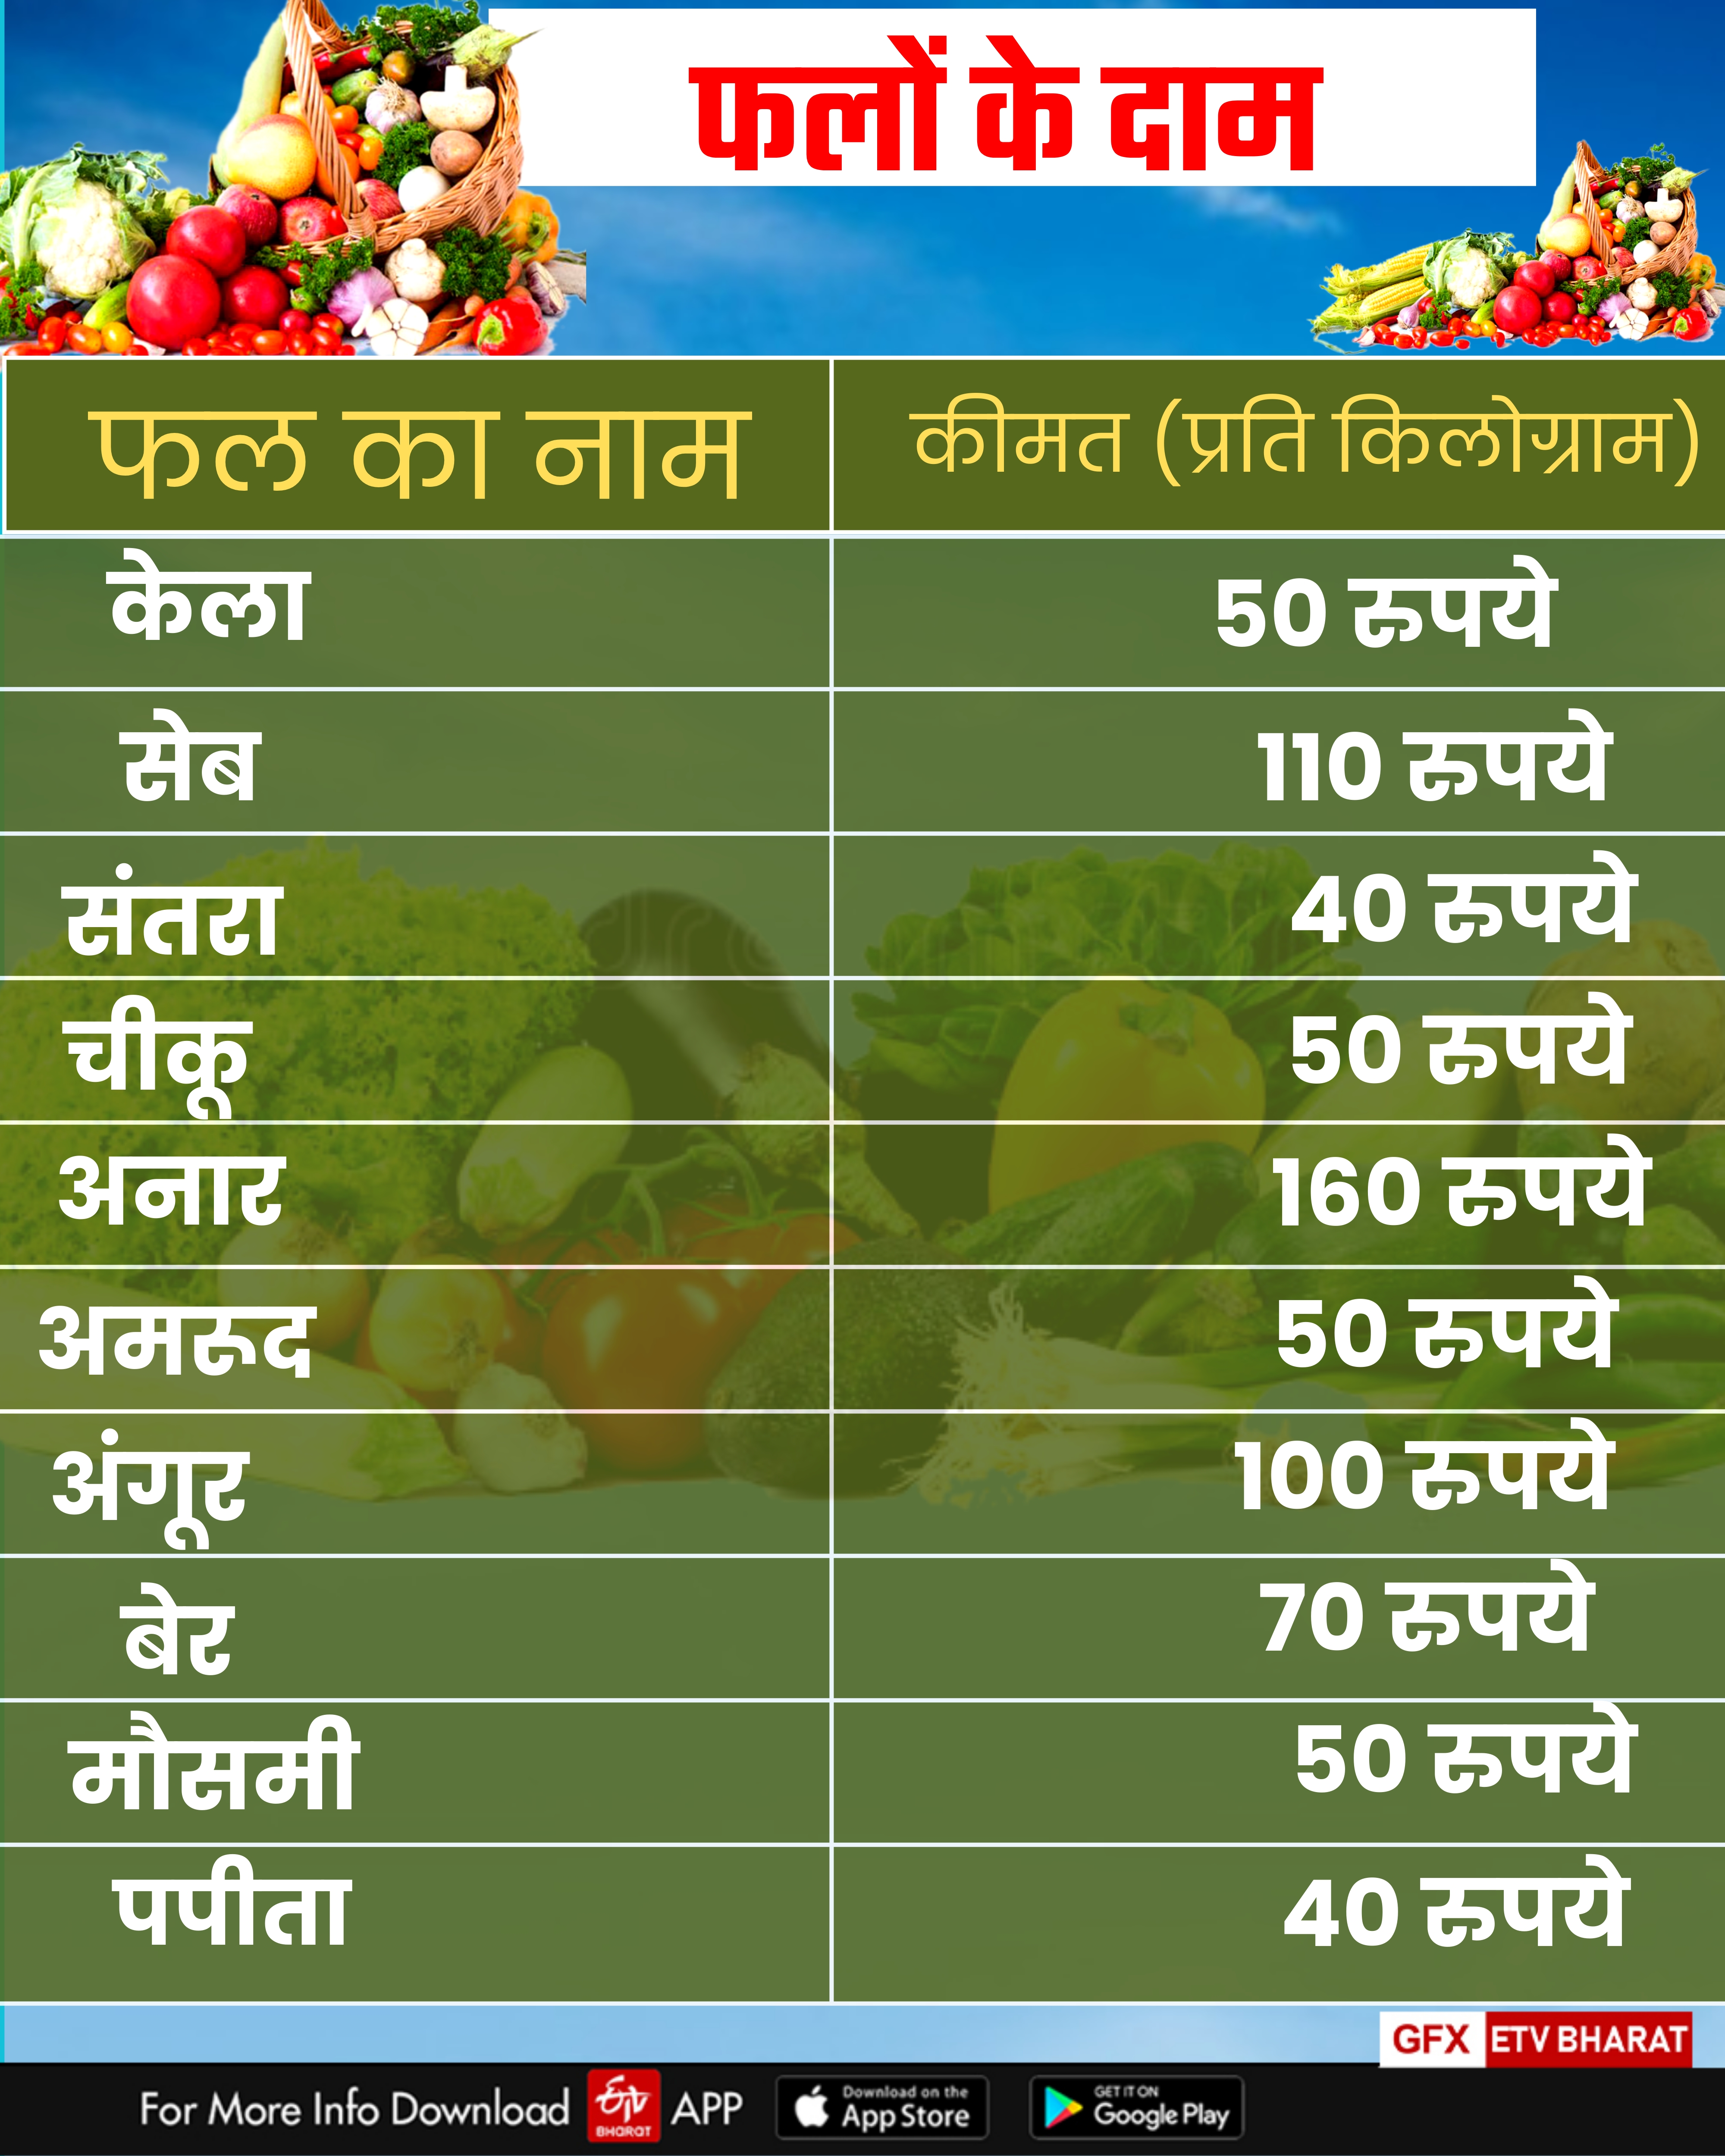 Vegetable Price in Haryana